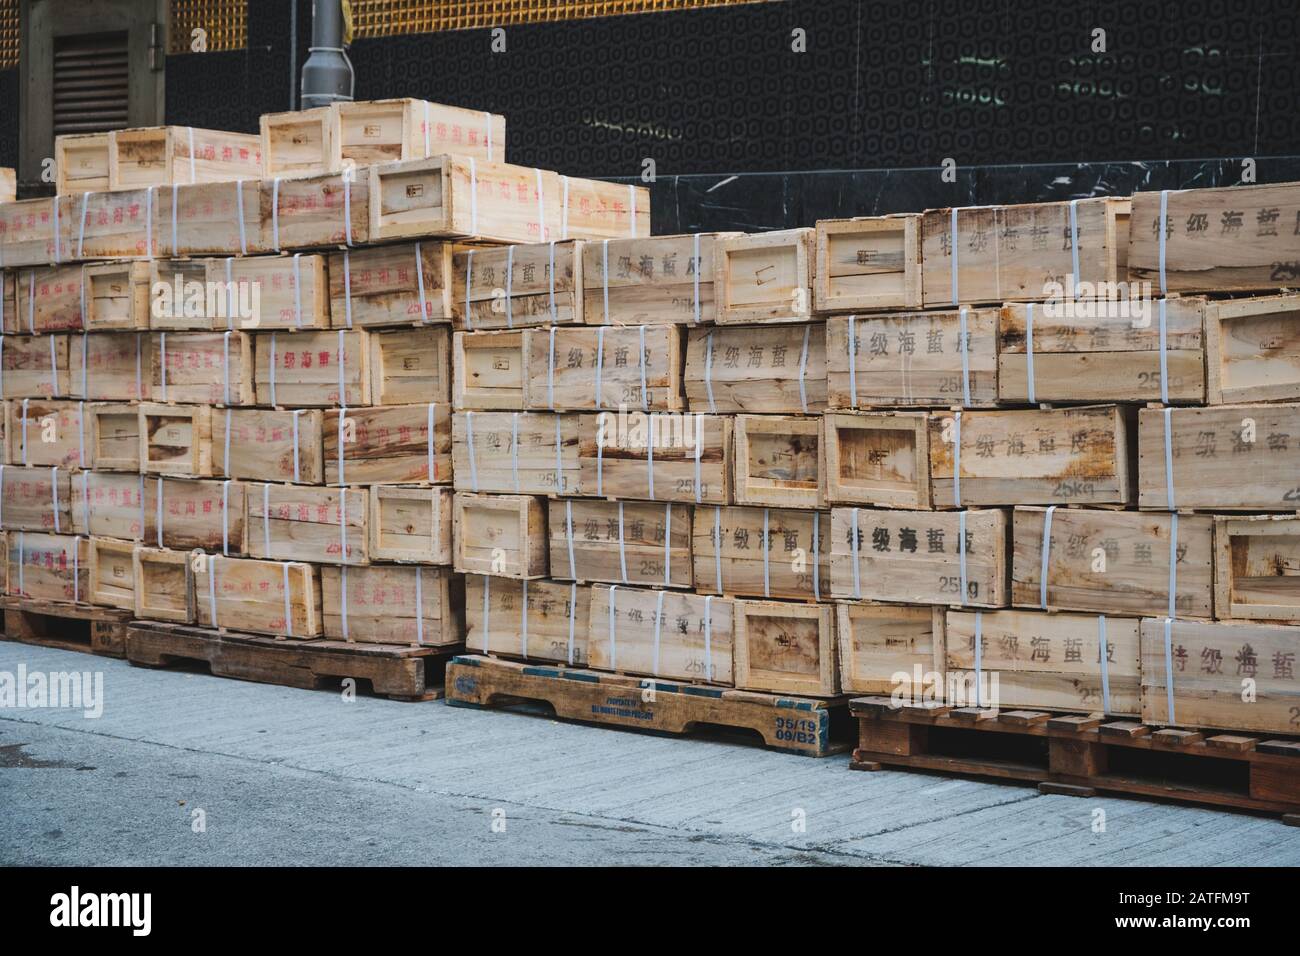 Hongkong, Hong Kong - November, 2019:  Chinese import, export goods in wooden boxes stacked on pallet Stock Photo